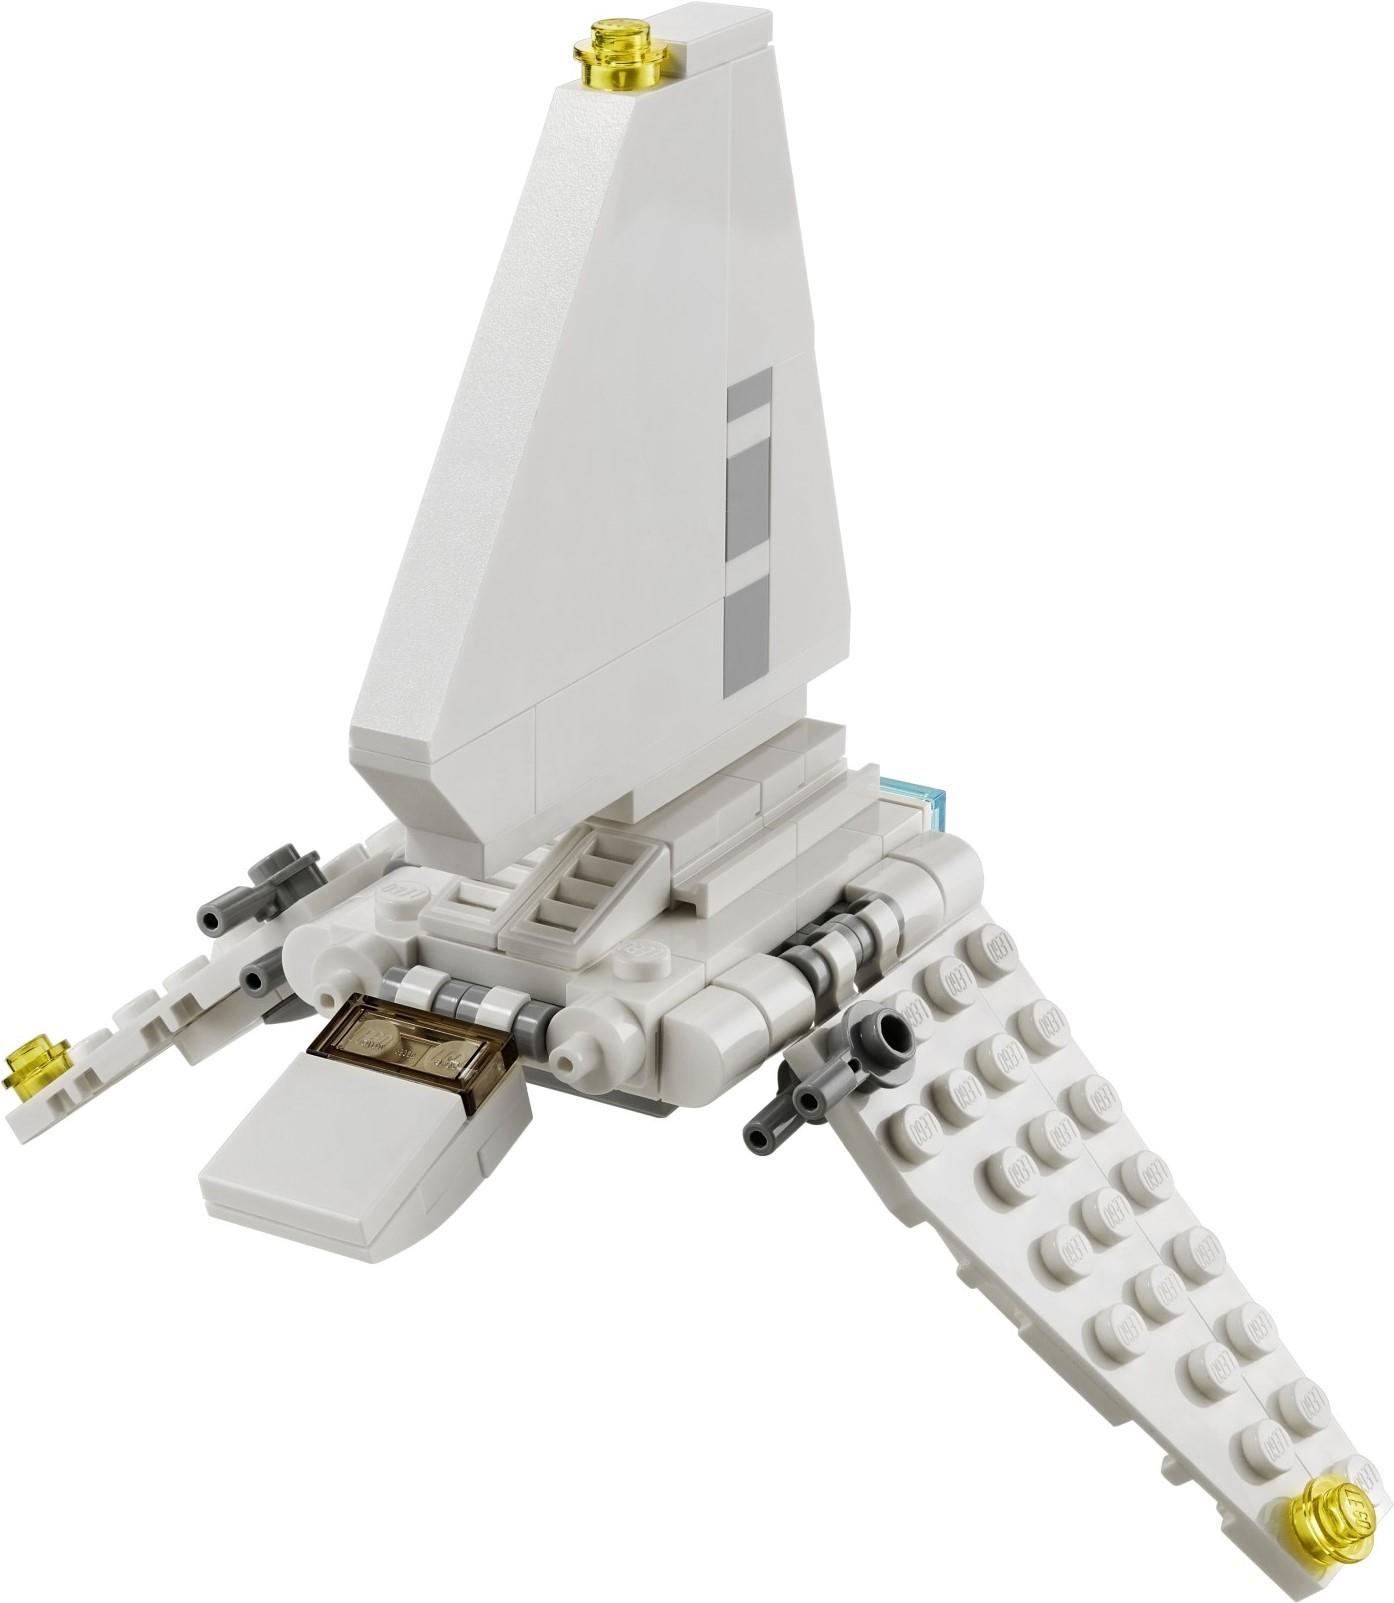 LEGO 30388 Star Wars Imperial Shuttle BrickEconomy